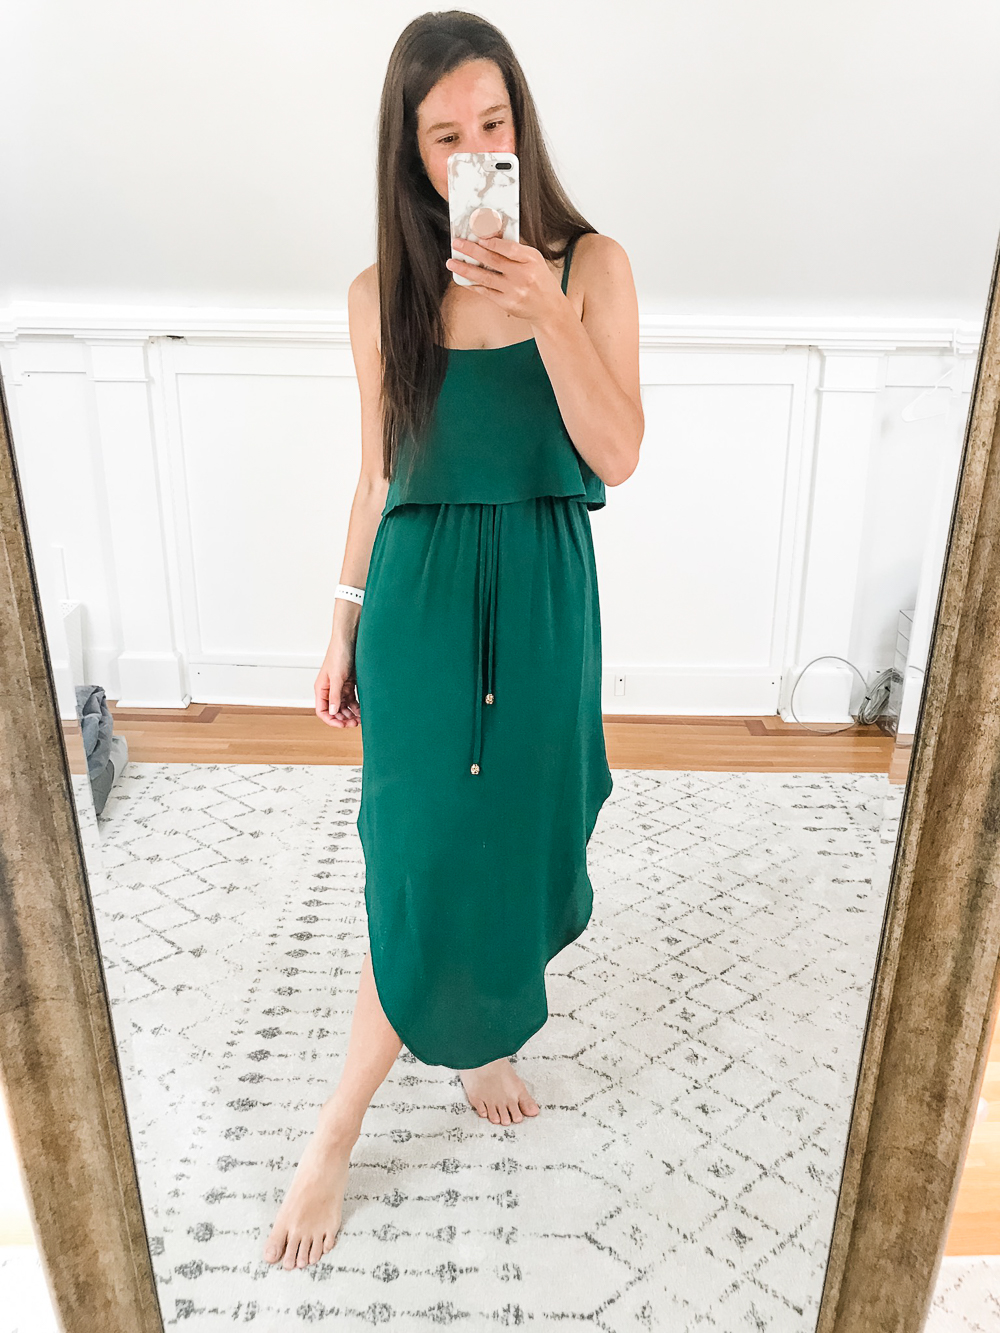 Amazon Green Split Hem Midi Dress, Amazon Prime Day Try-On Haul: Top Affordable Fashion Finds